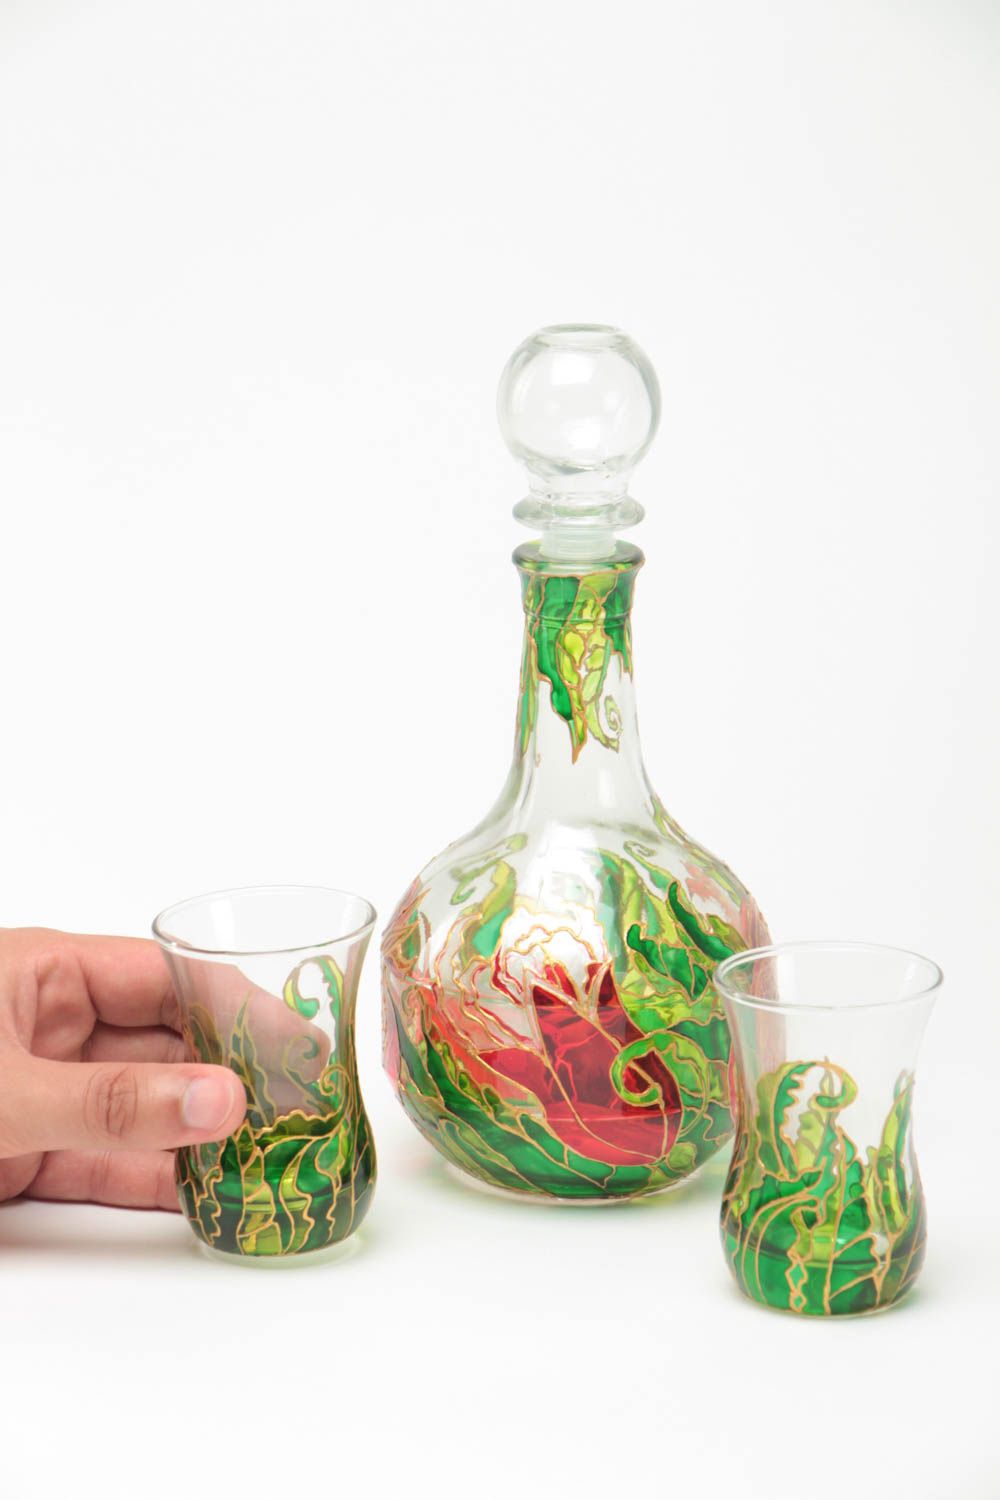 Ensemble carafe et petits verres en verre peints faits main originaux Grenade photo 5